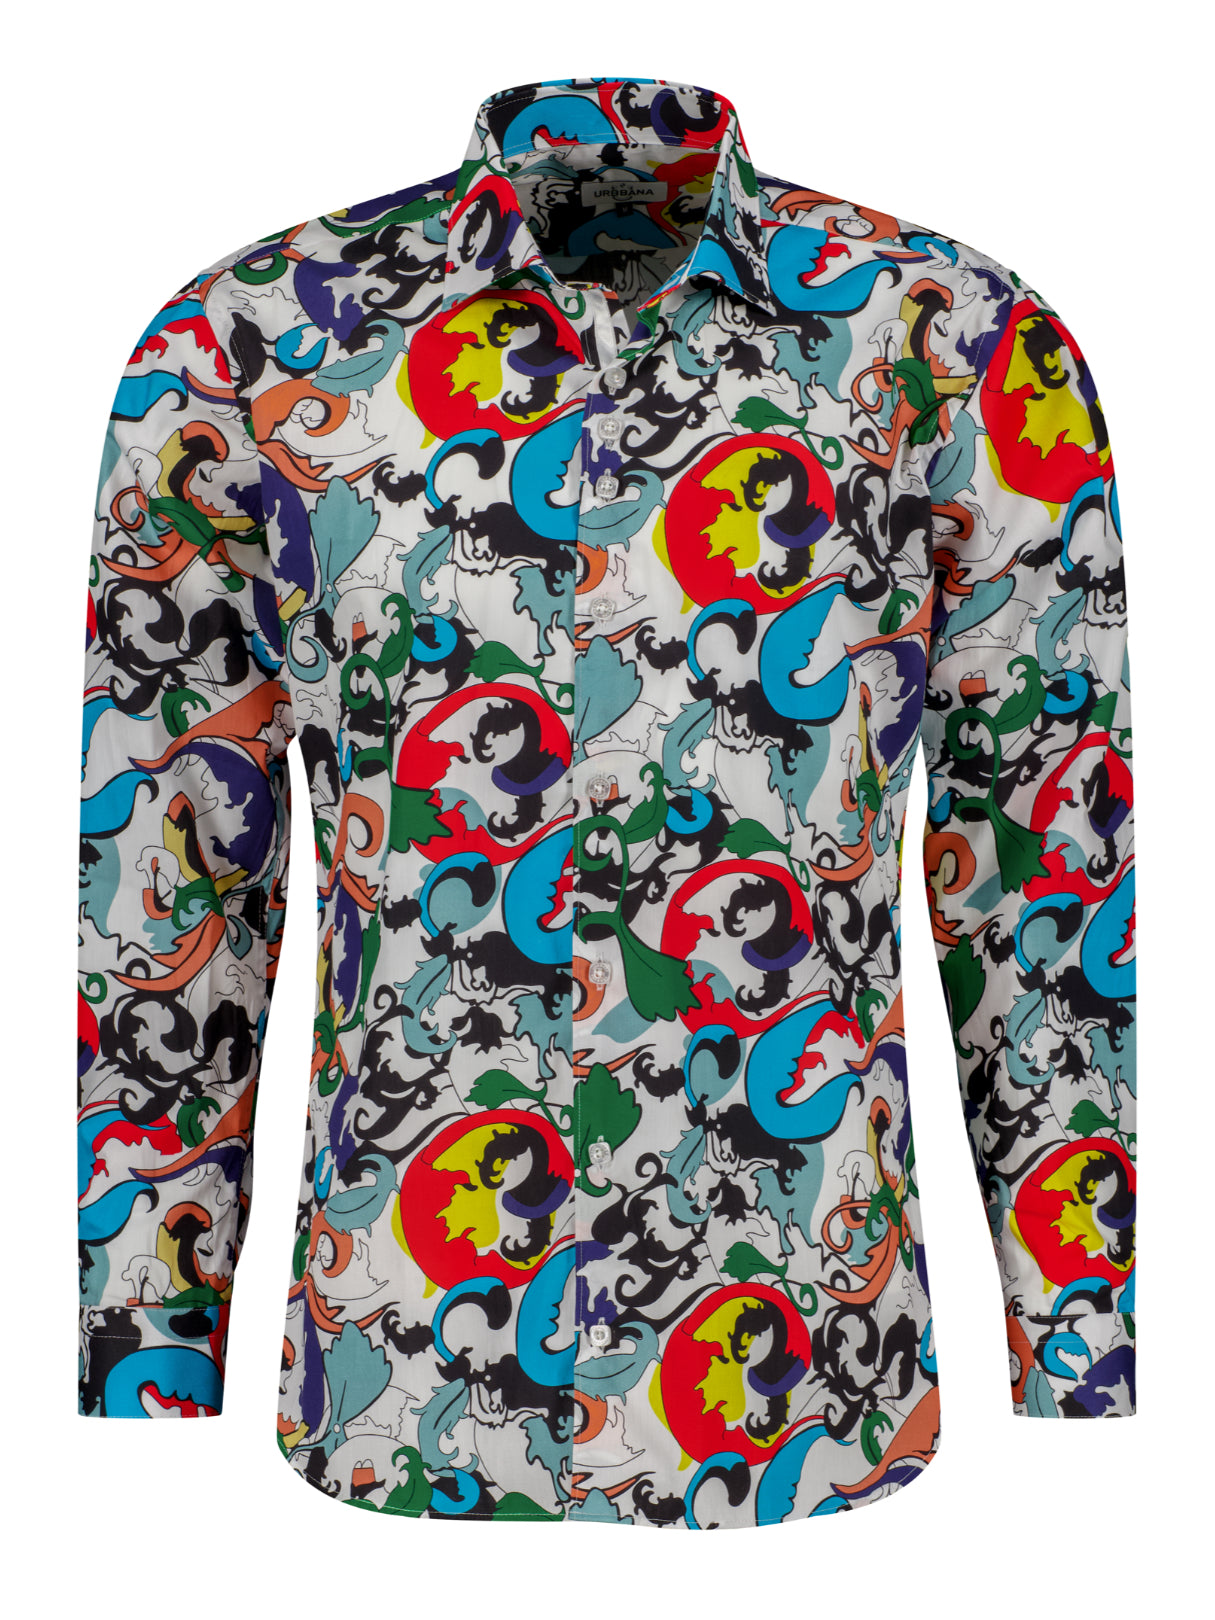 The Mickey Shirt - Shirt by Urbbana